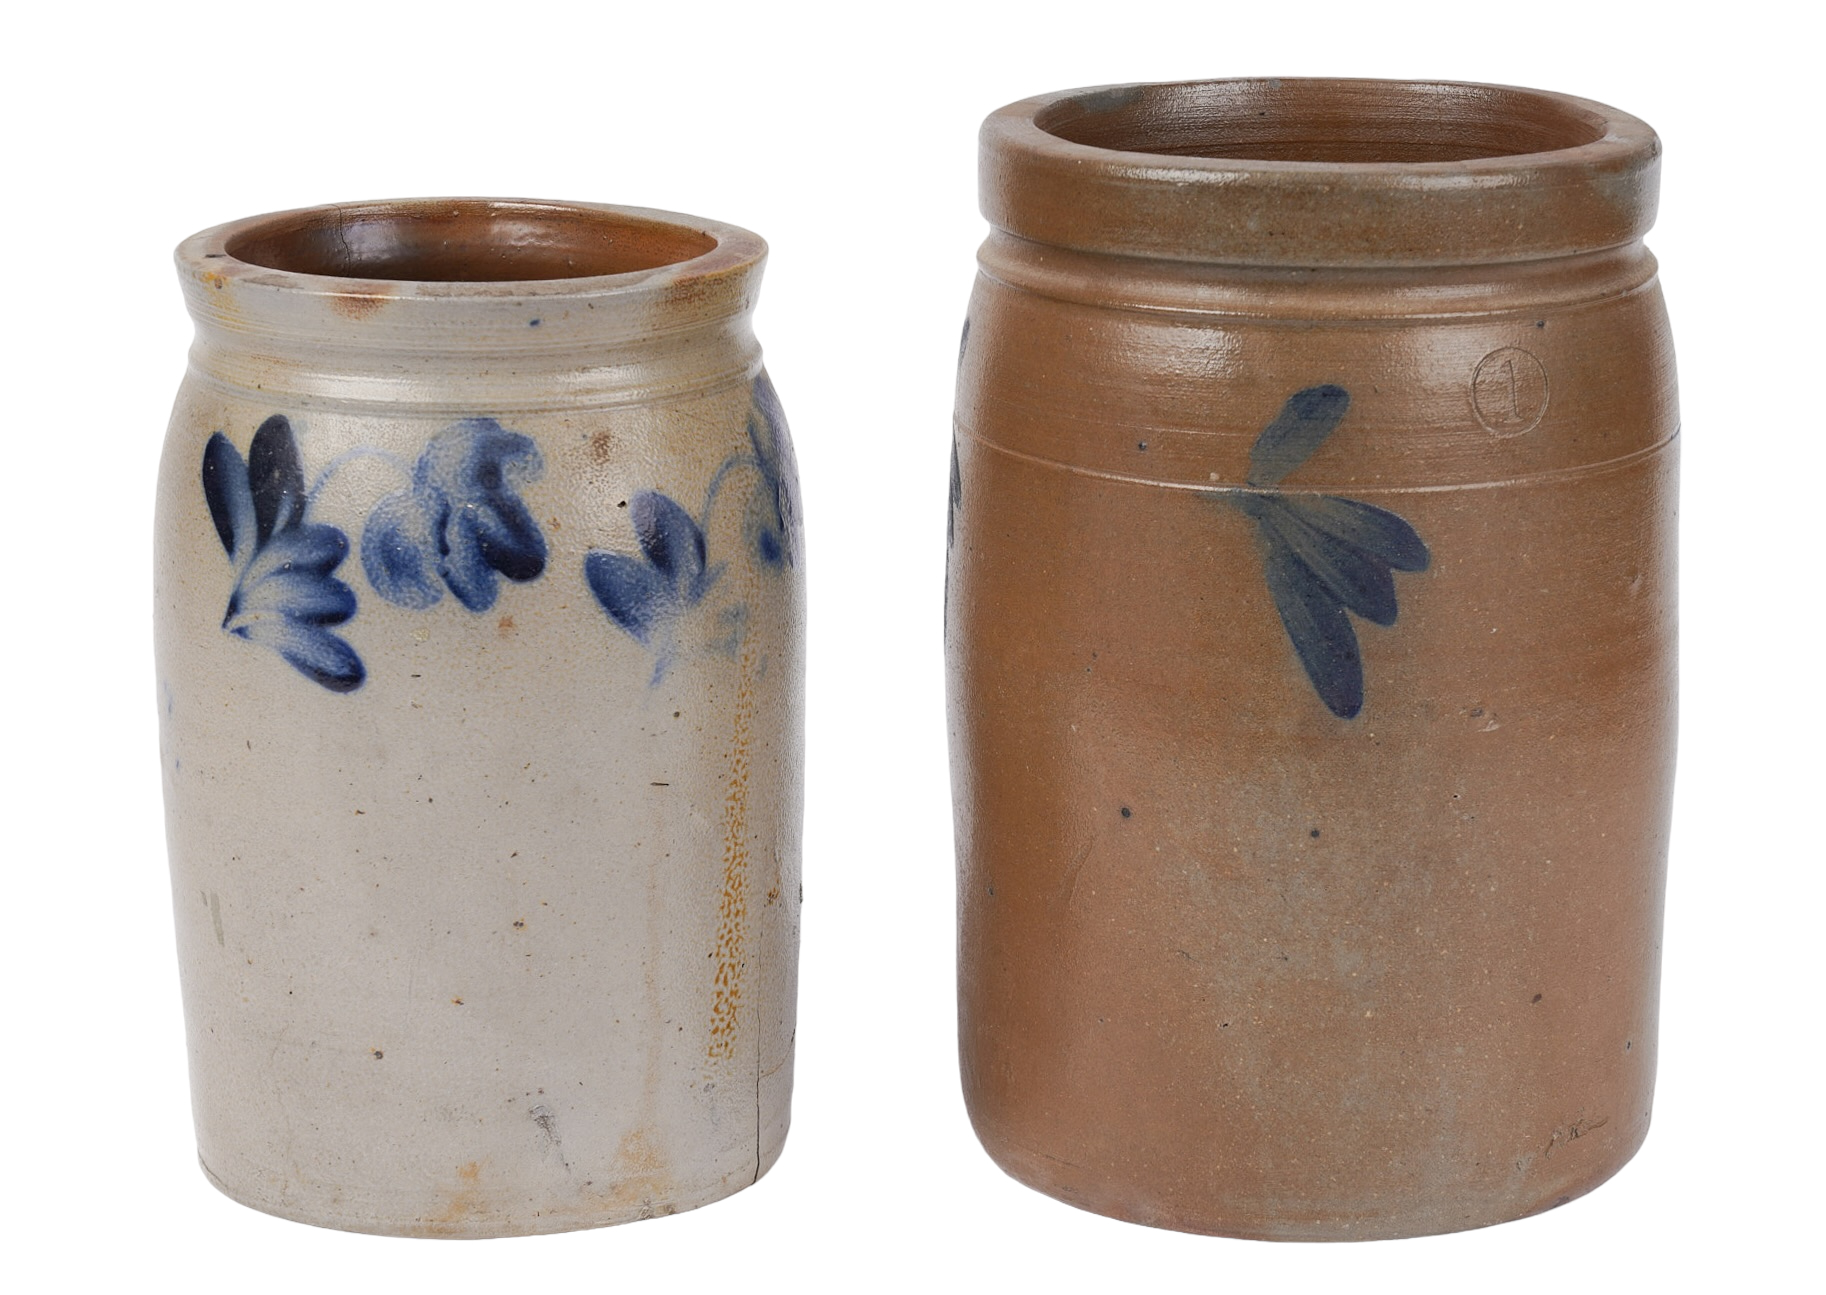 (2) Blue decorated stoneware jars, each